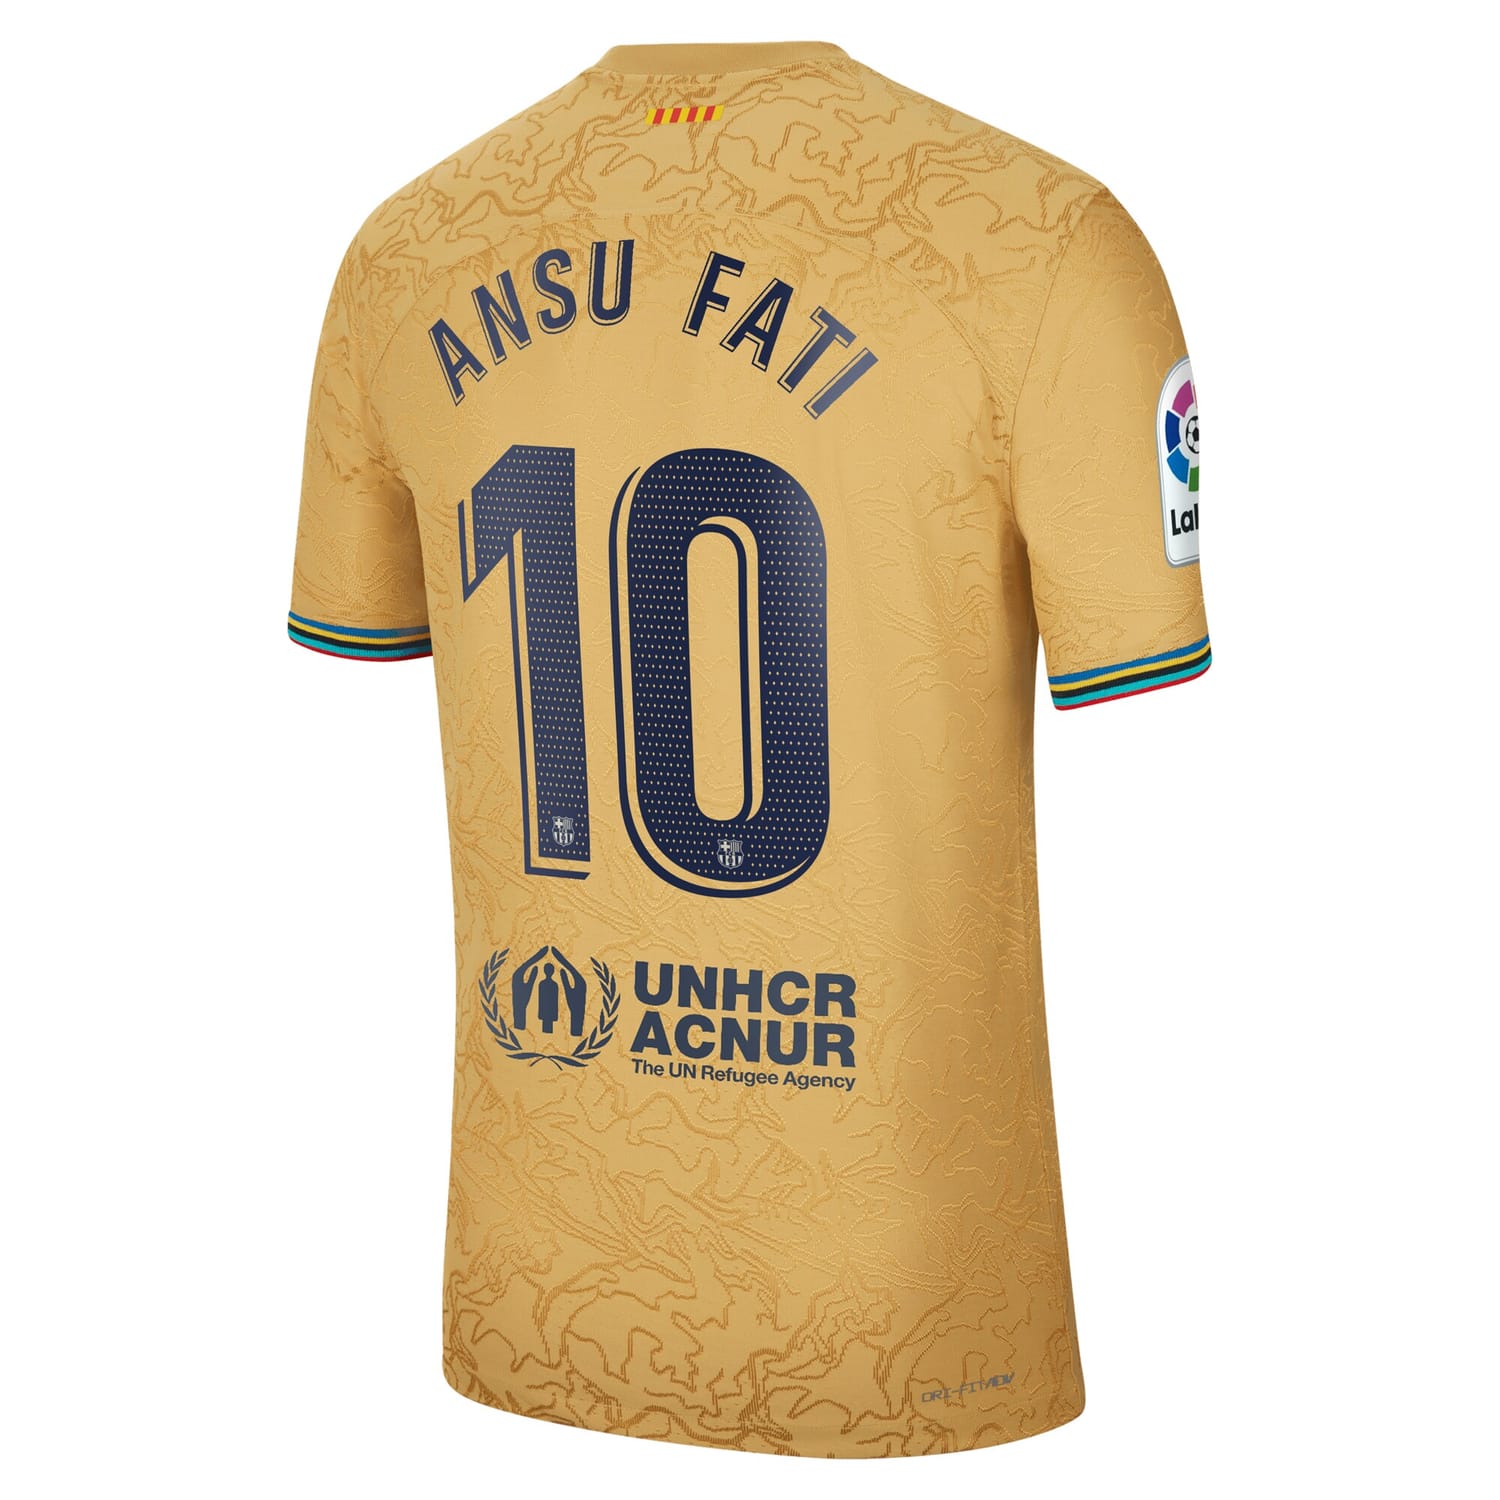 La Liga Barcelona Away Authentic Jersey Shirt Yellow 2022-23 player Ansu Fati printing for Men